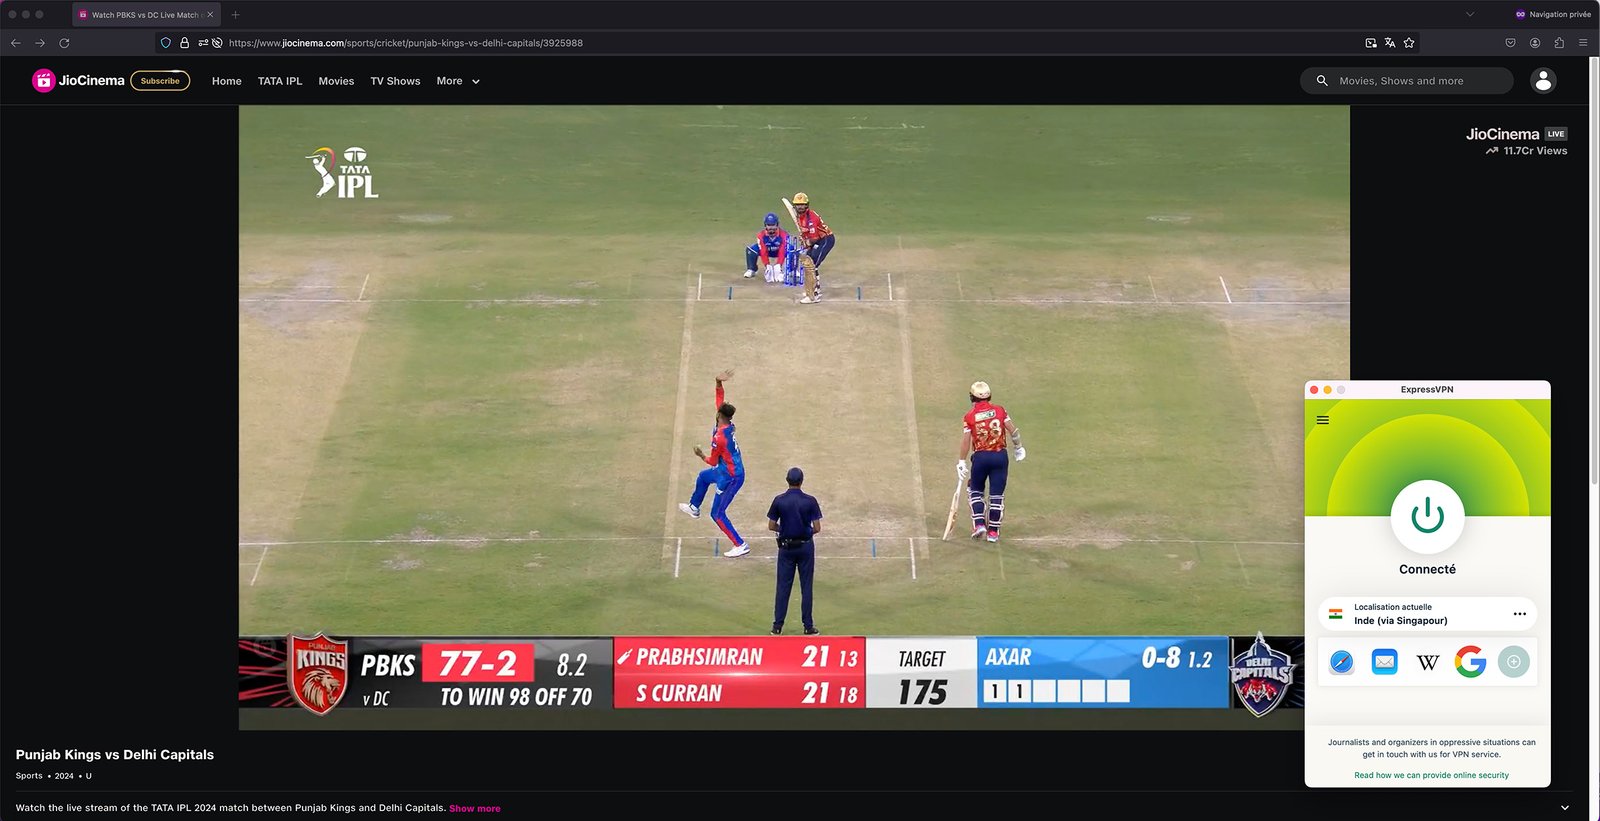 Watch TATA IPL abroad on Jiocinema - free live streaming with ExpressVPN